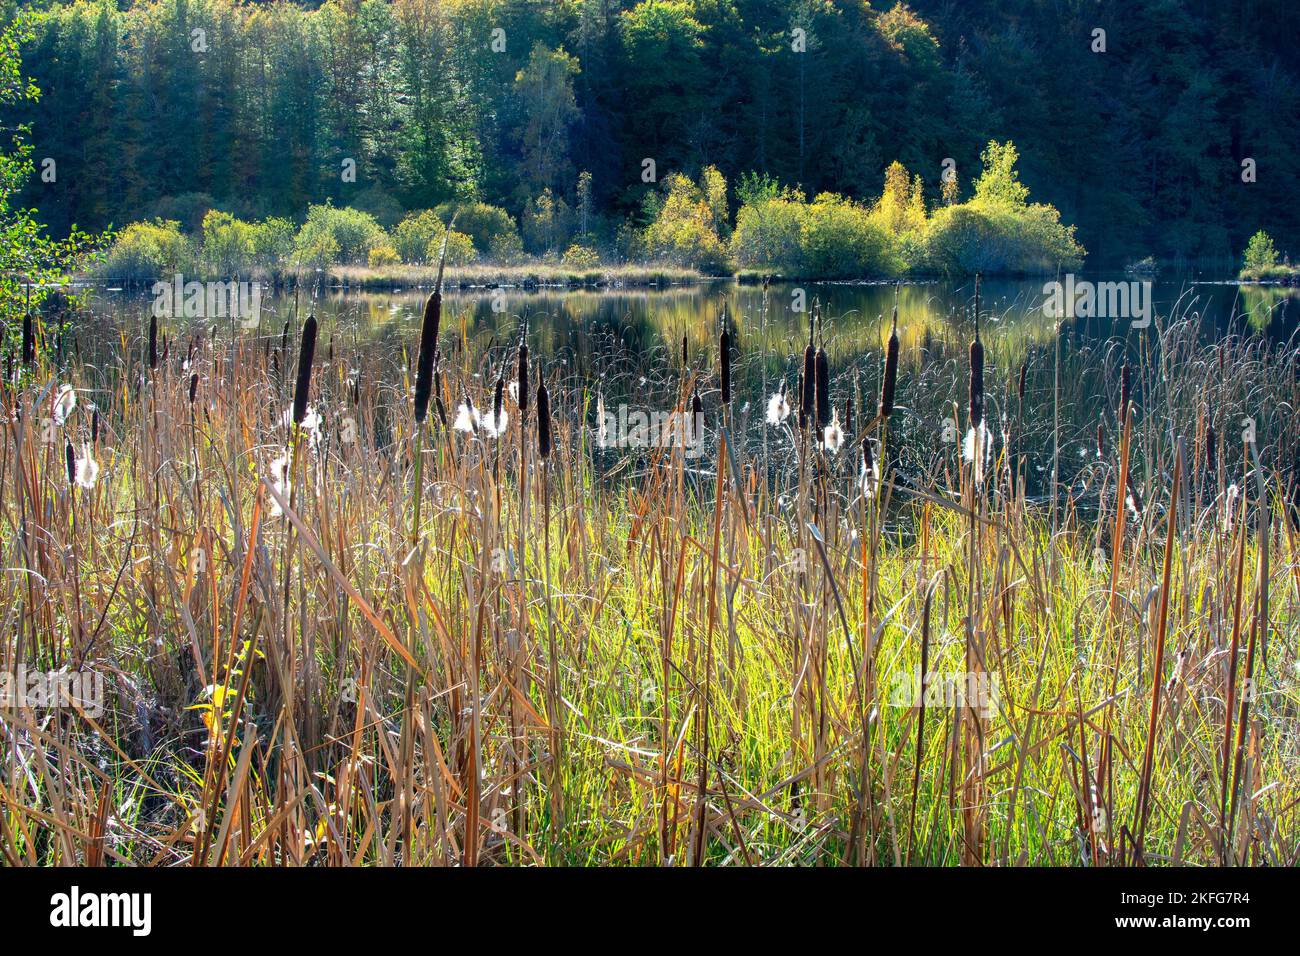 Rushes ( typha latifolia rushes ) au bord d'un lac. France Banque D'Images